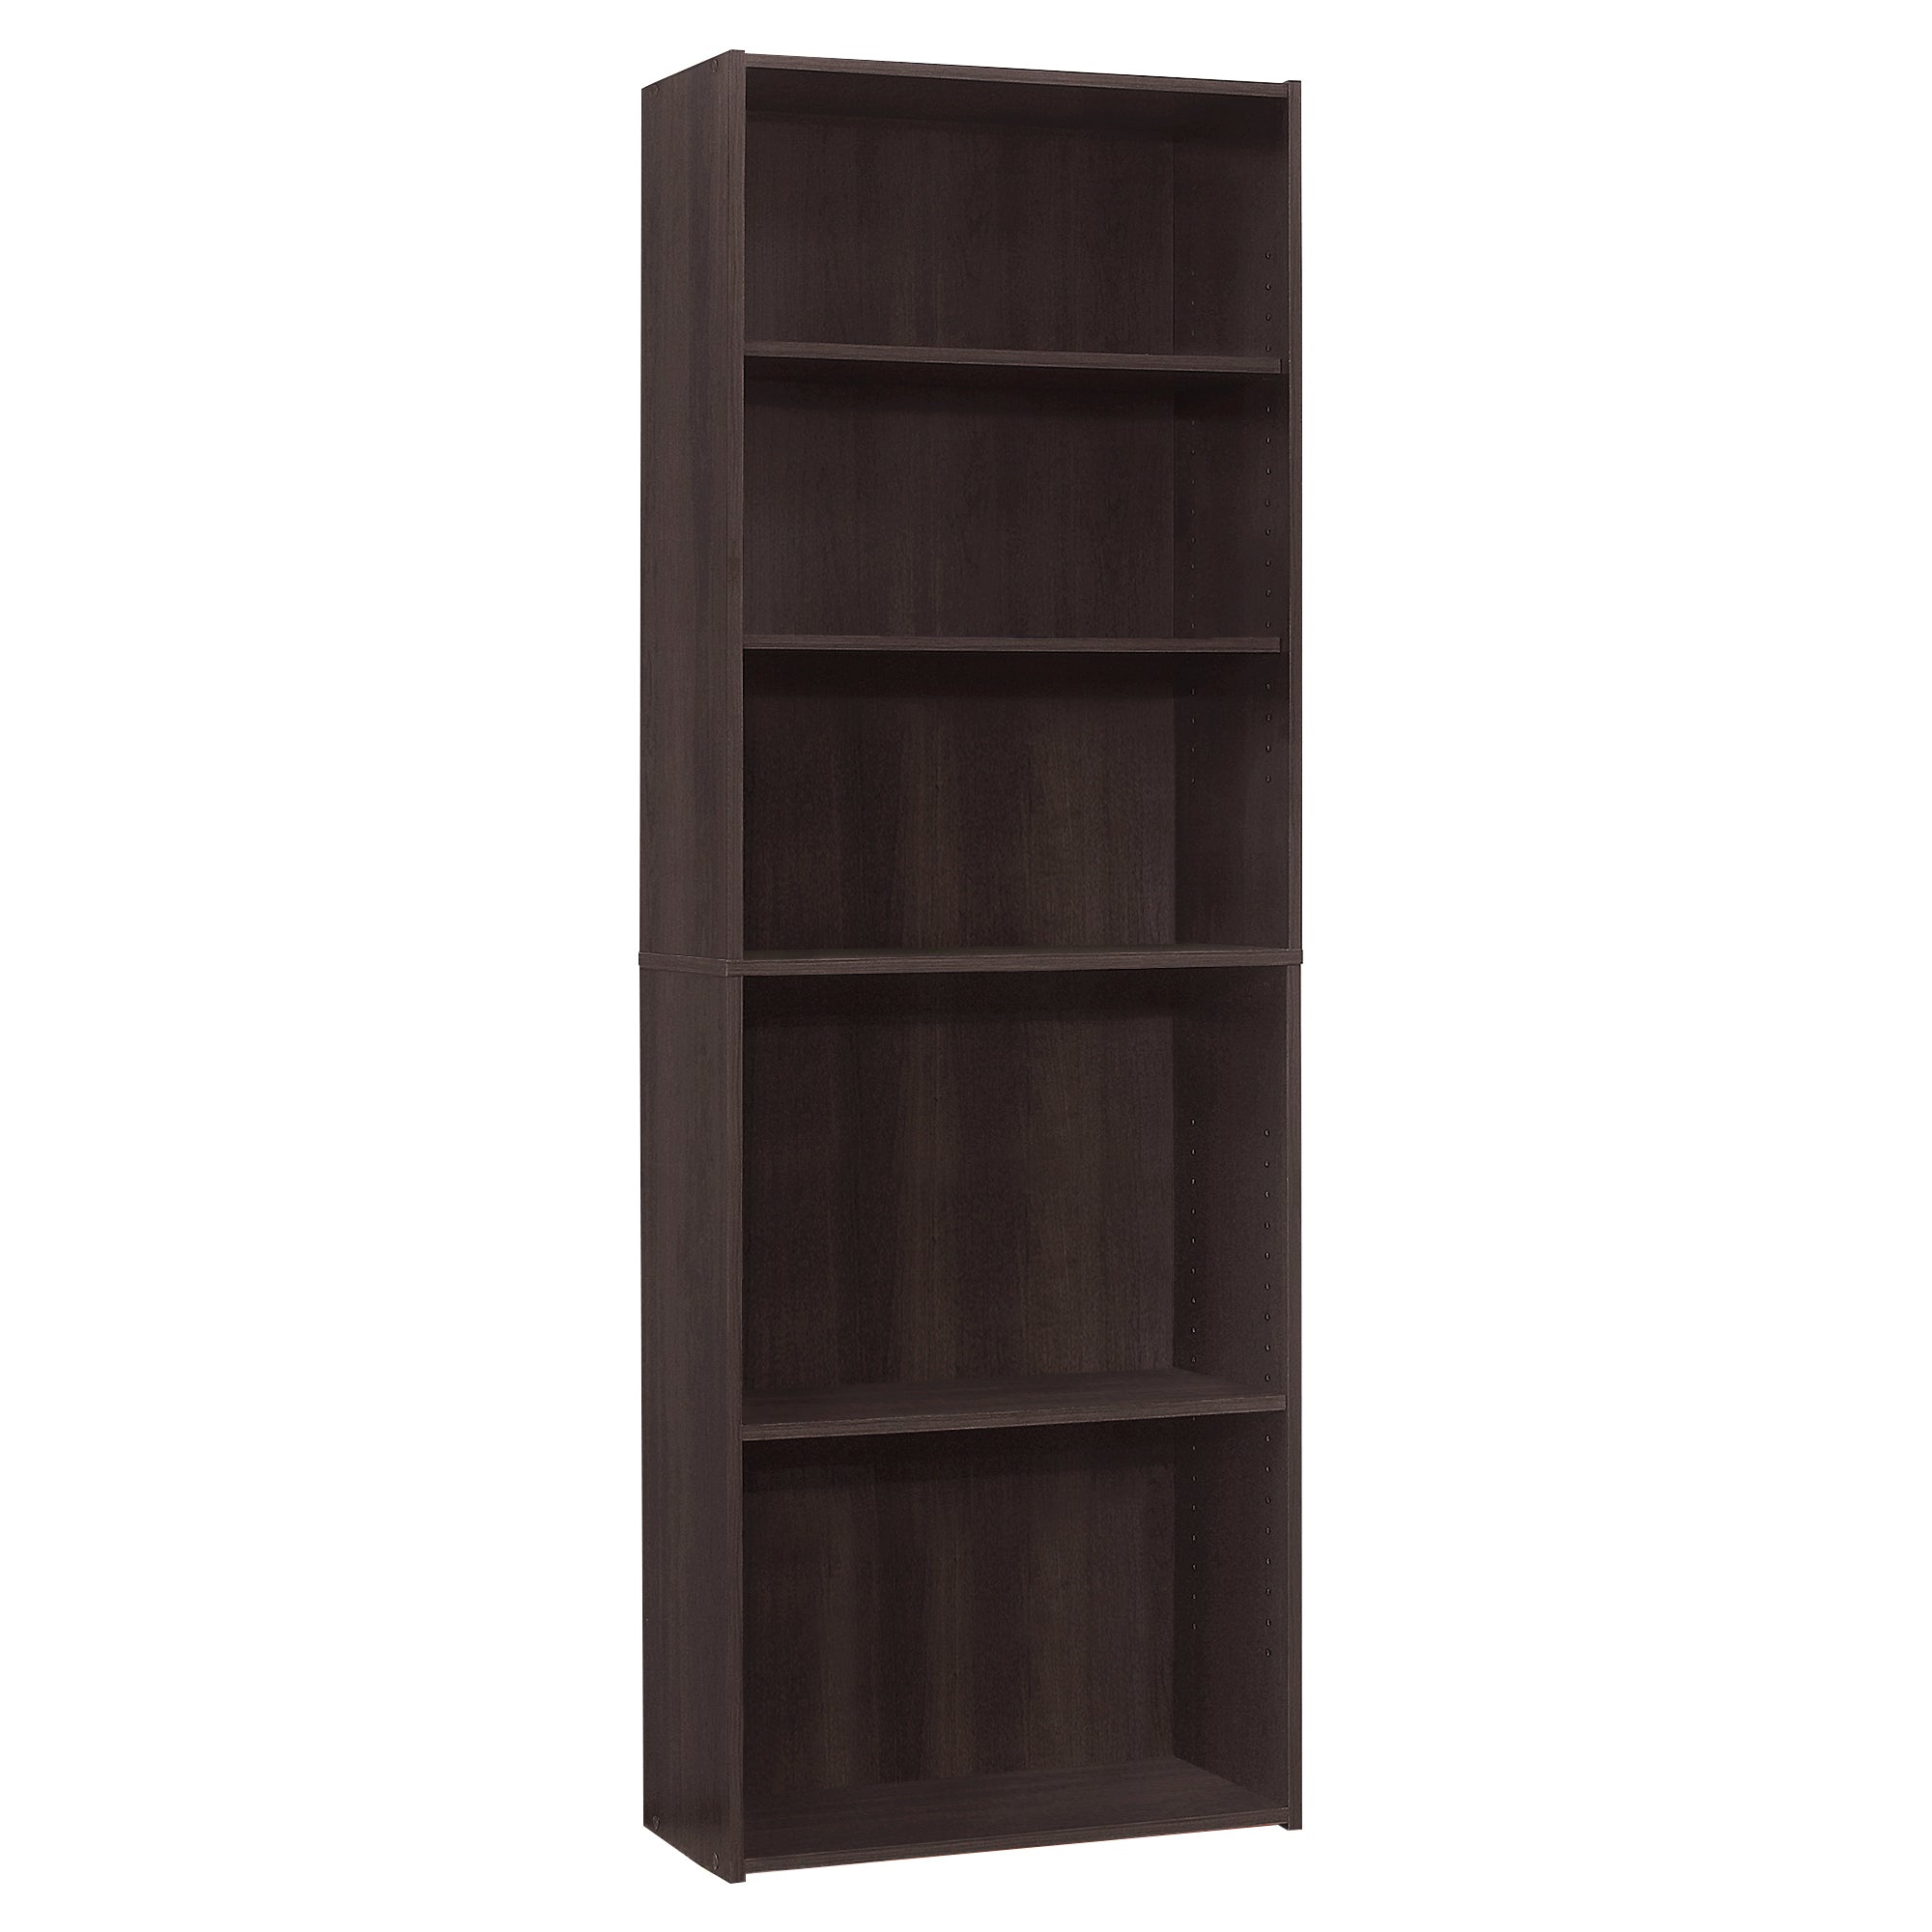 MN-287467    Bookshelf, Bookcase, 6 Tier, 72"H, Office, Bedroom, Laminate, Dark Brown, Contemporary, Modern, Transitional